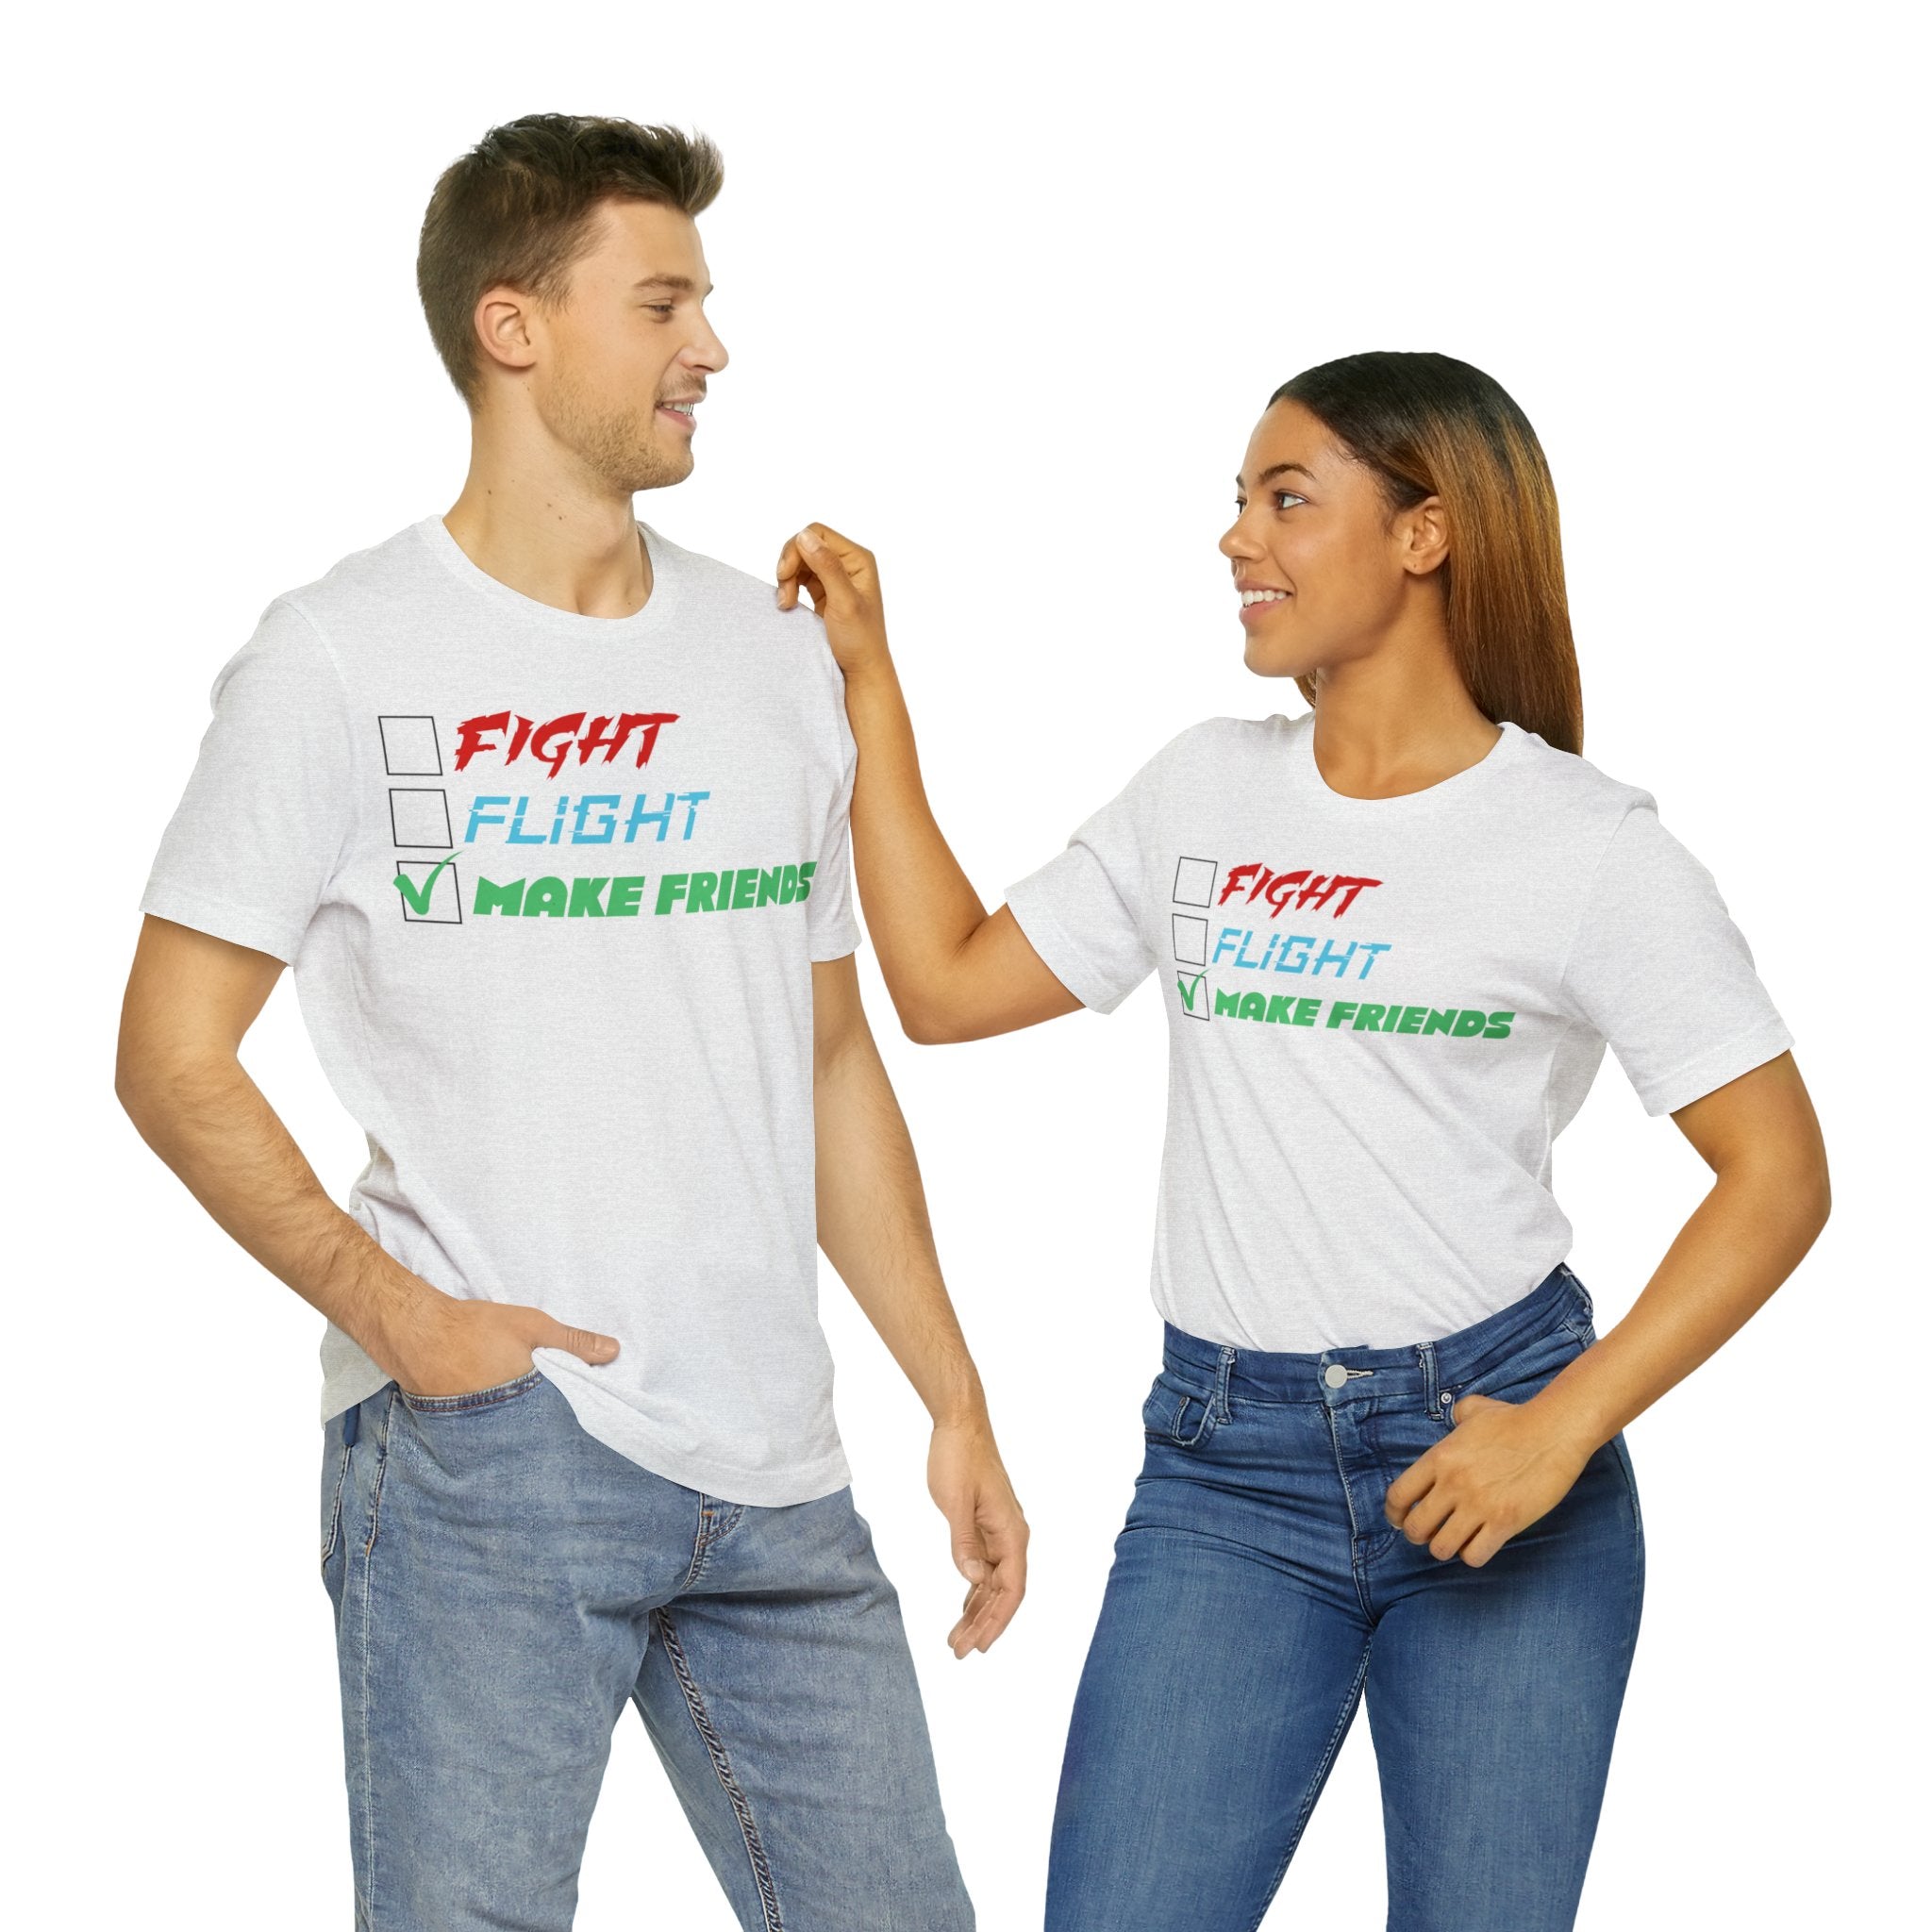 Fight - Flight - Make Friends [Adult T-shirt]